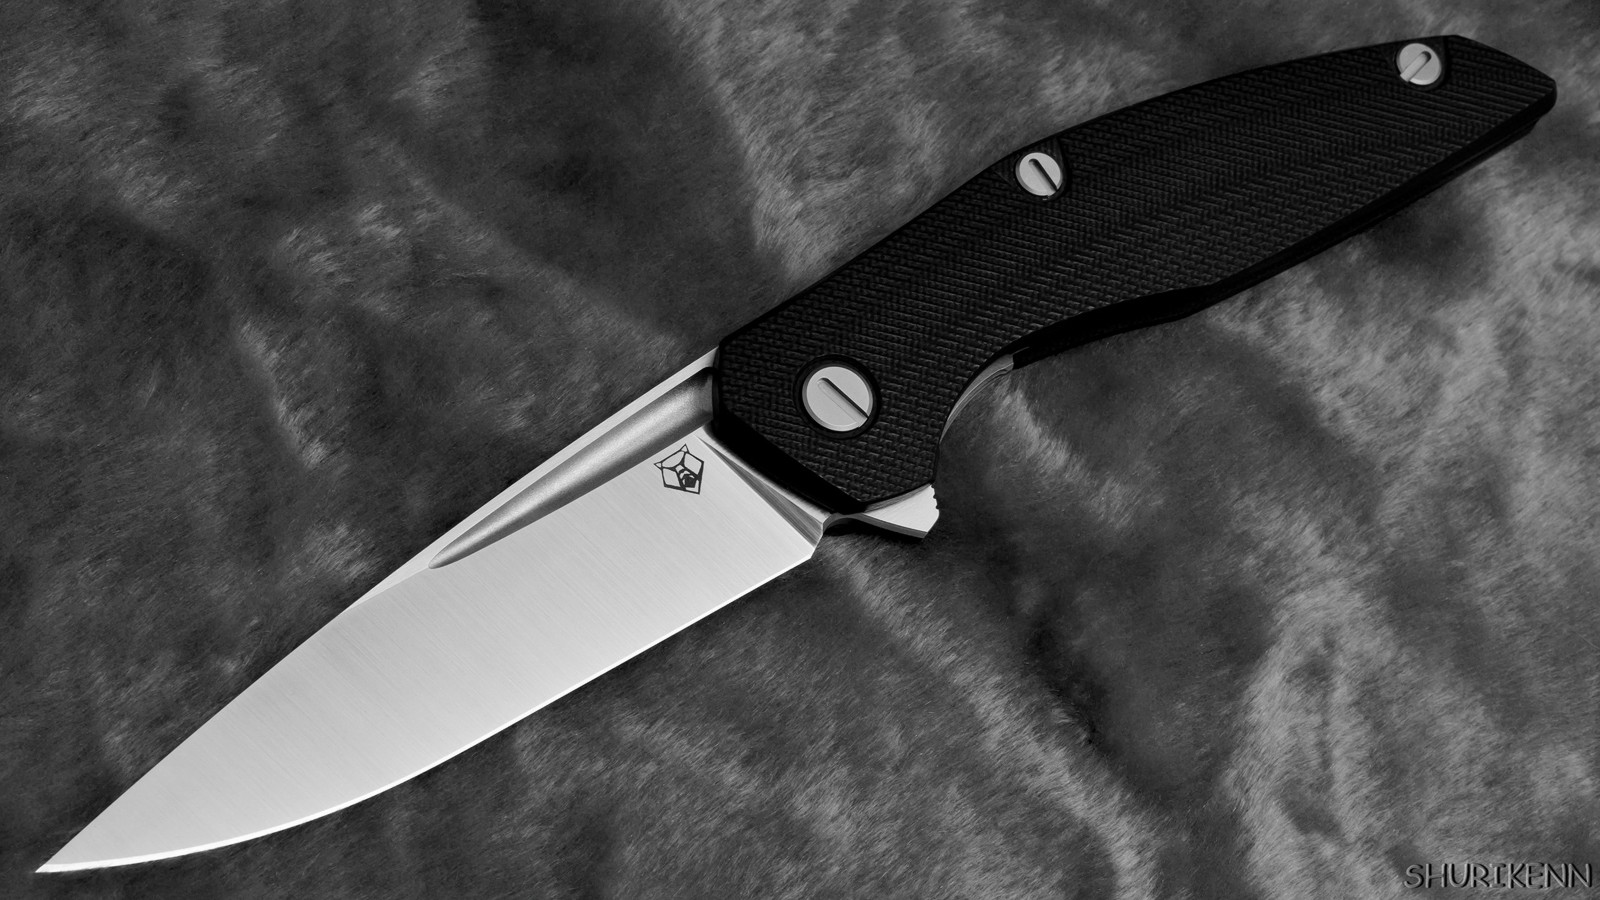 General 1600x900 weapon knife monochrome